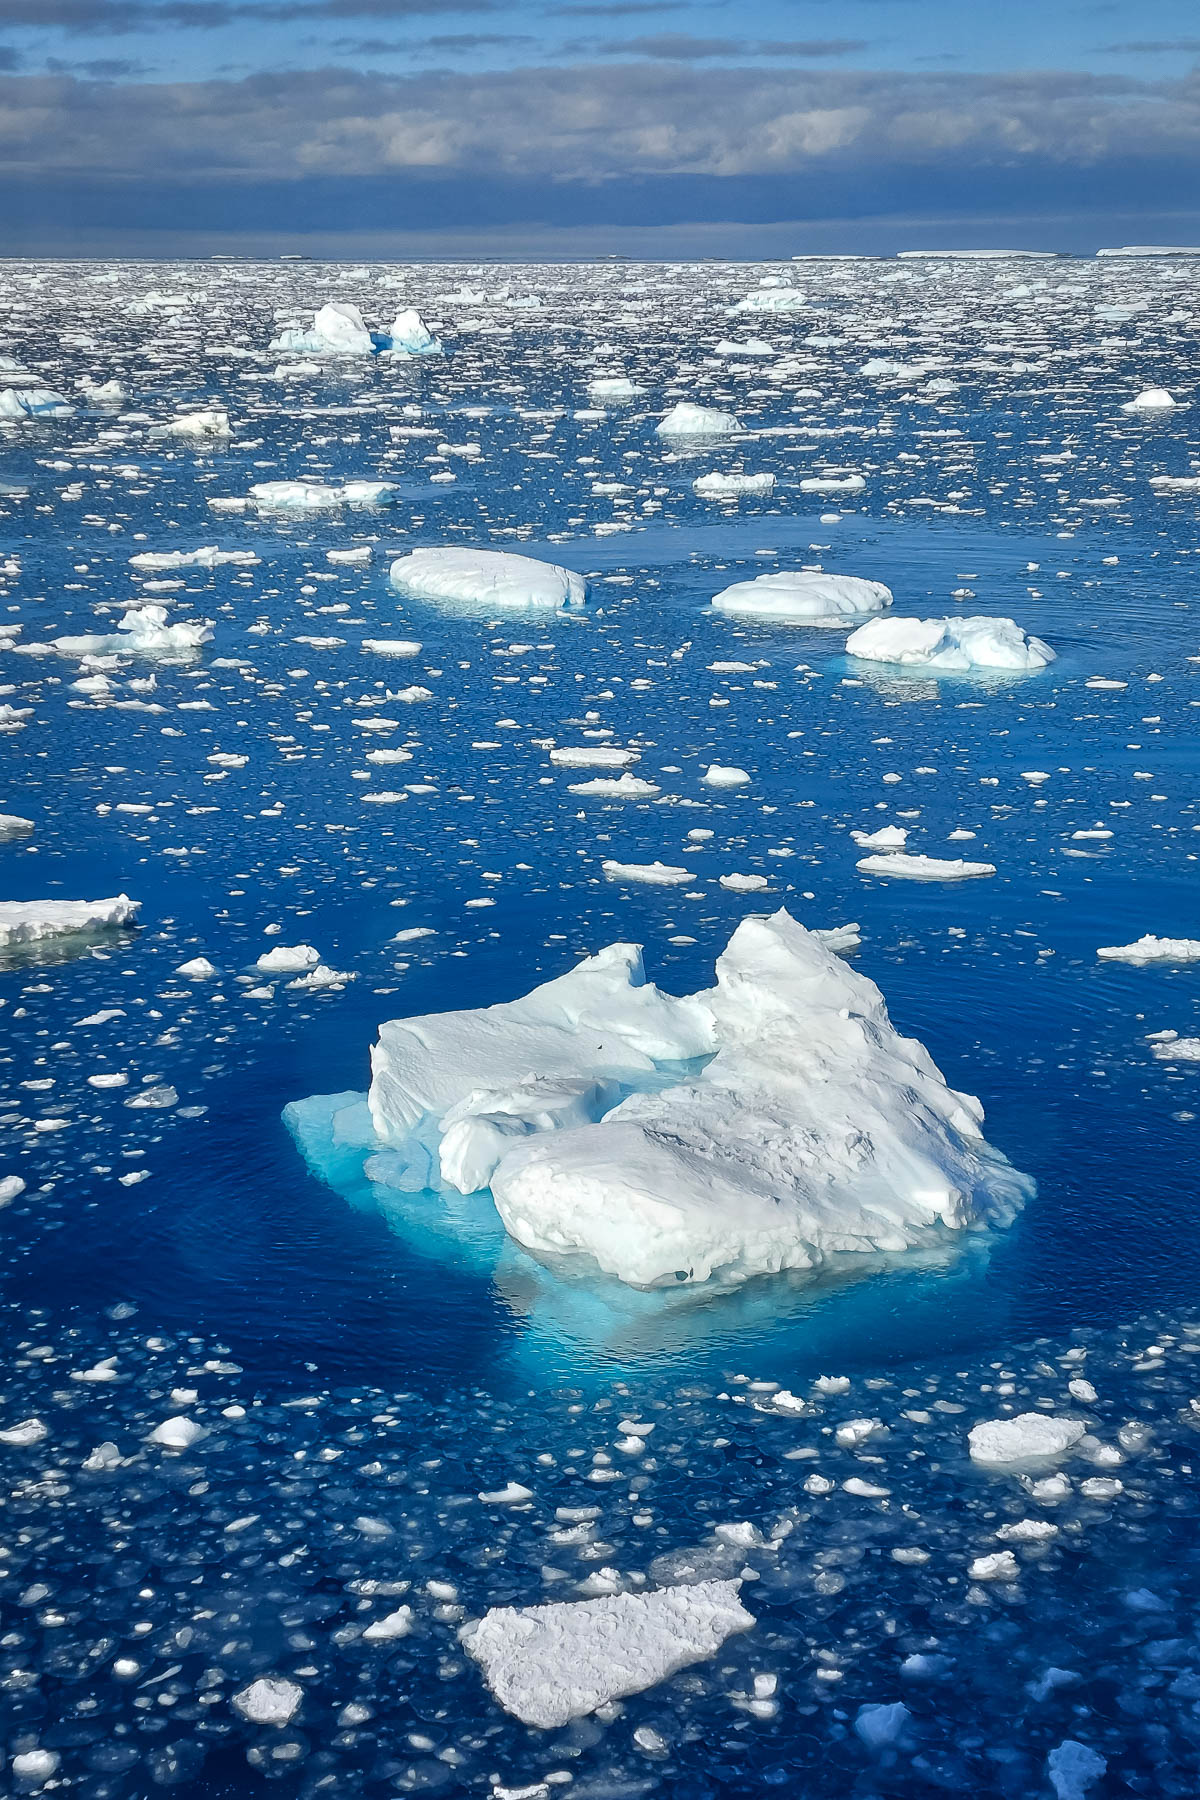 Iceberg amongst many other small icebergs.